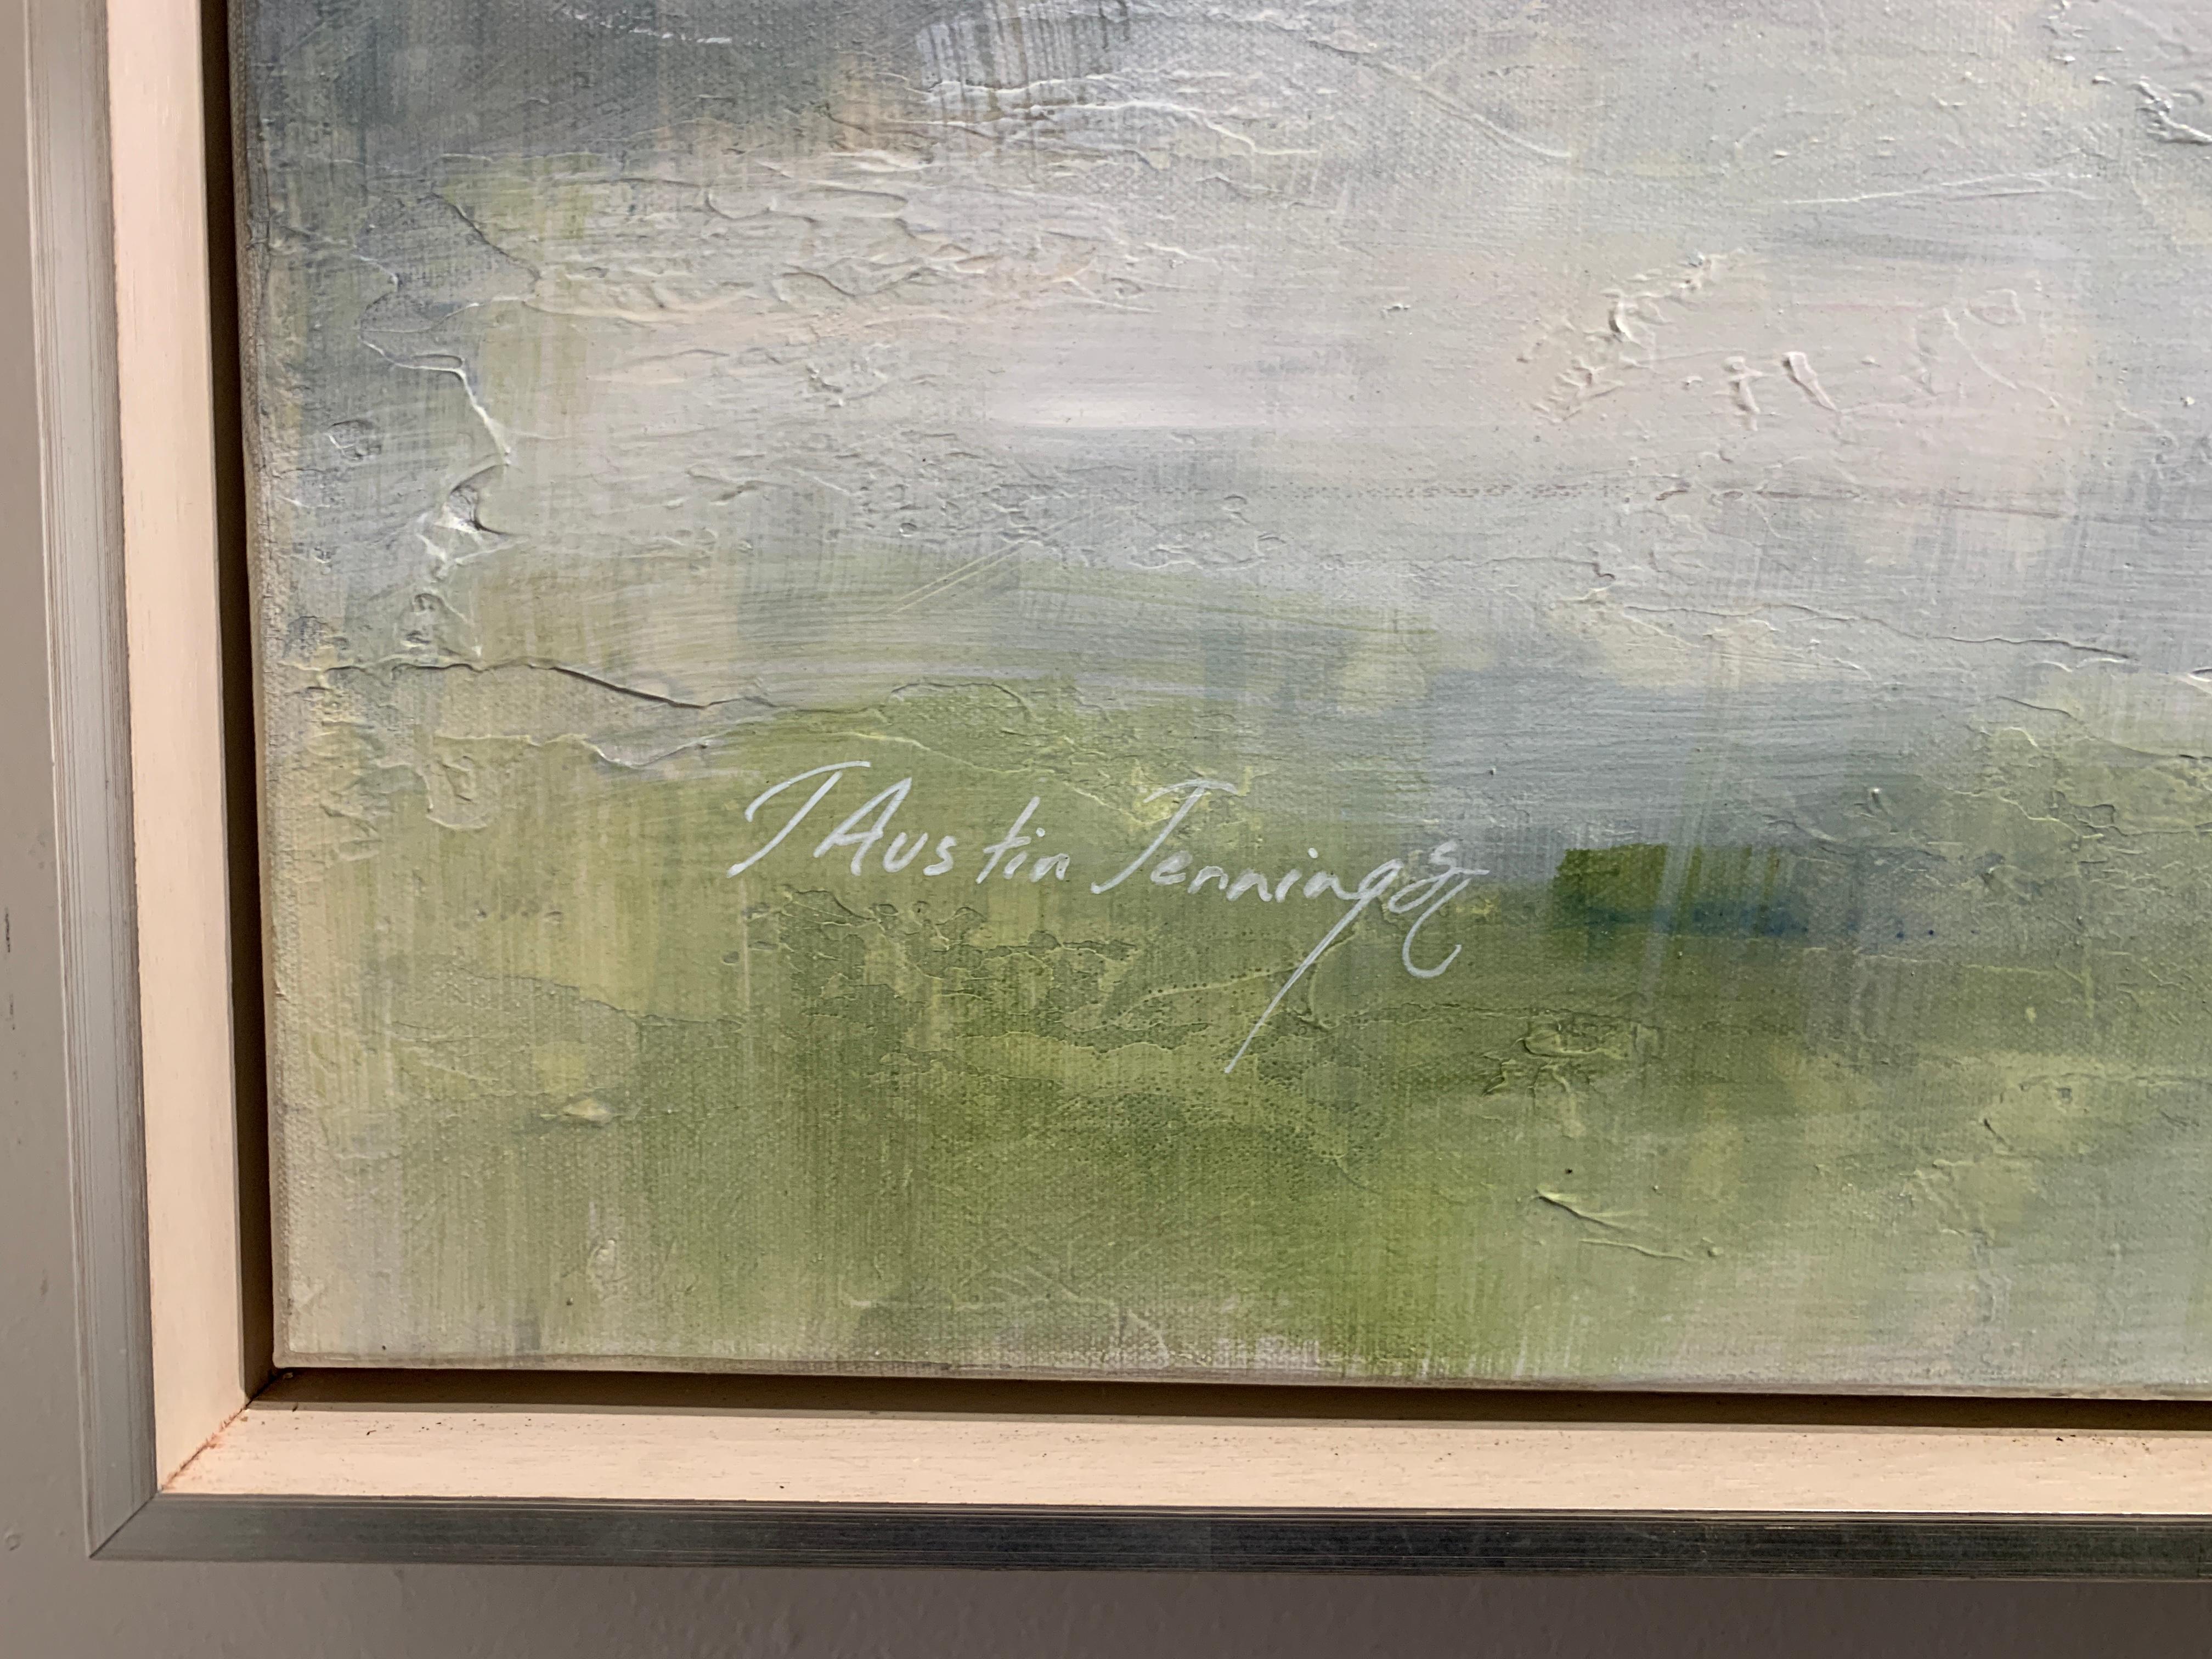 Summer Slips Away J Austin Jennings 2019 Large Square Framed Landscape 1